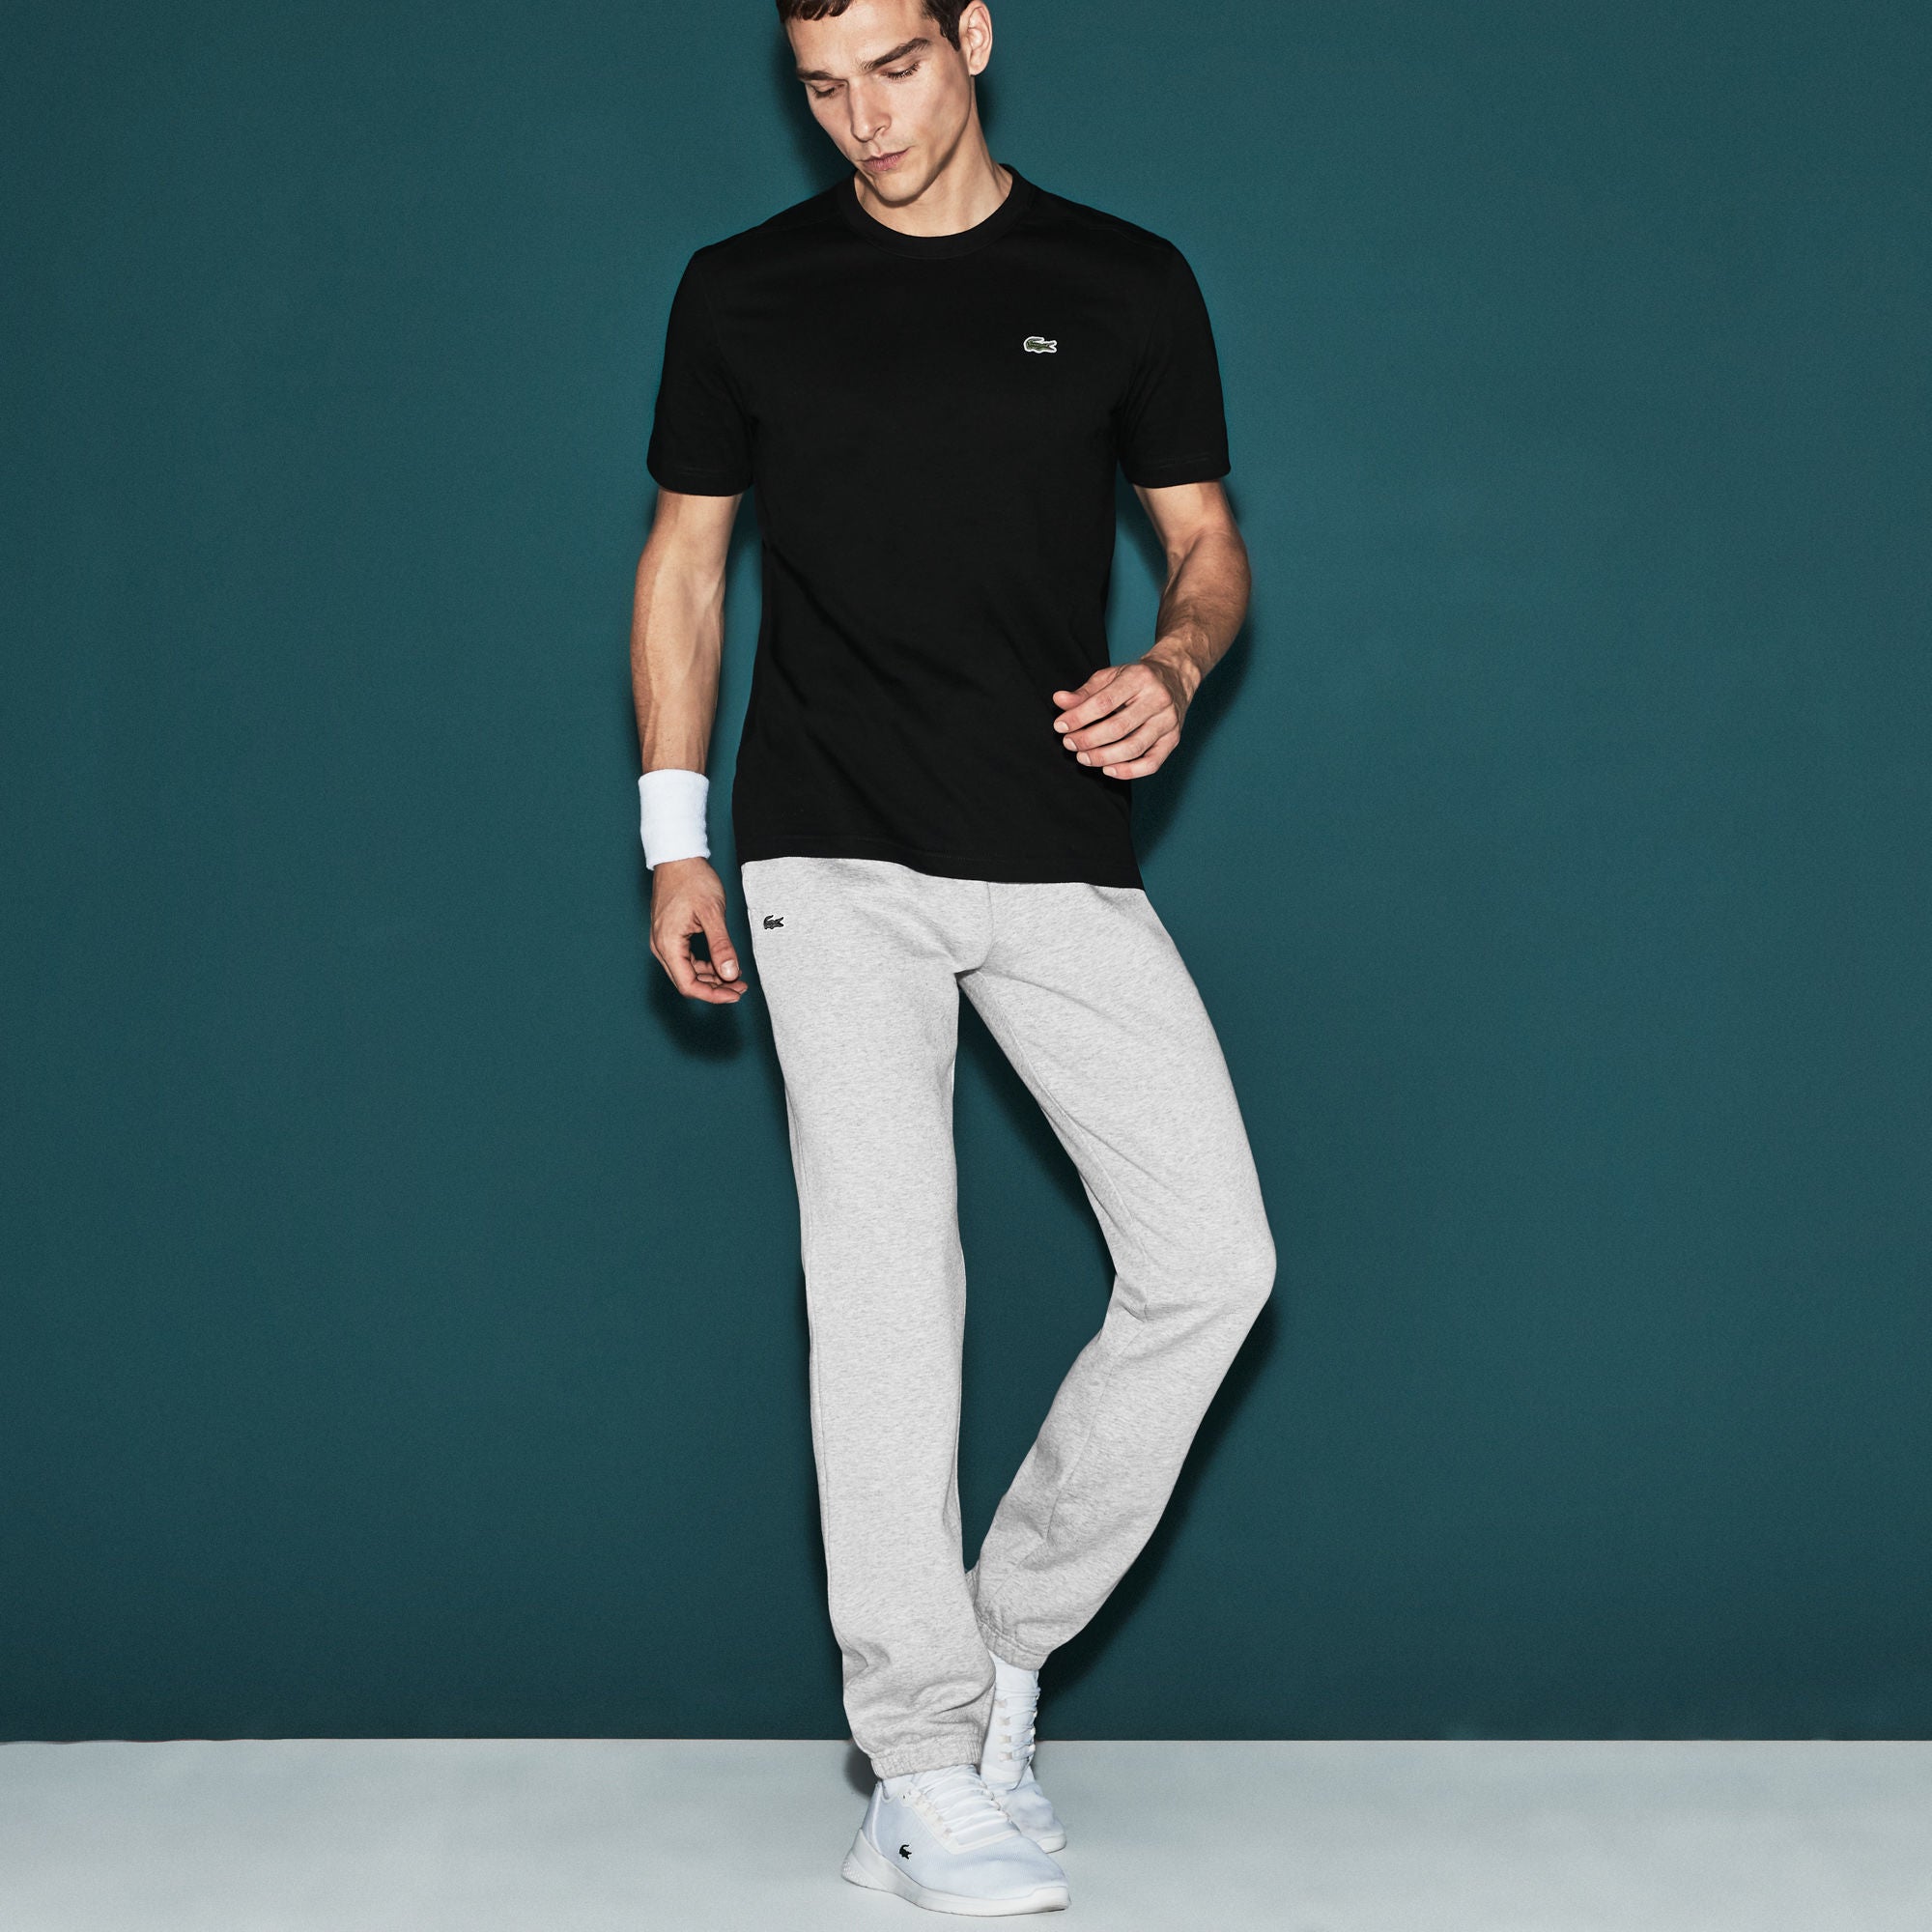 Lacoste Men's Sport Fleece Gray Casual Pant 2Xl